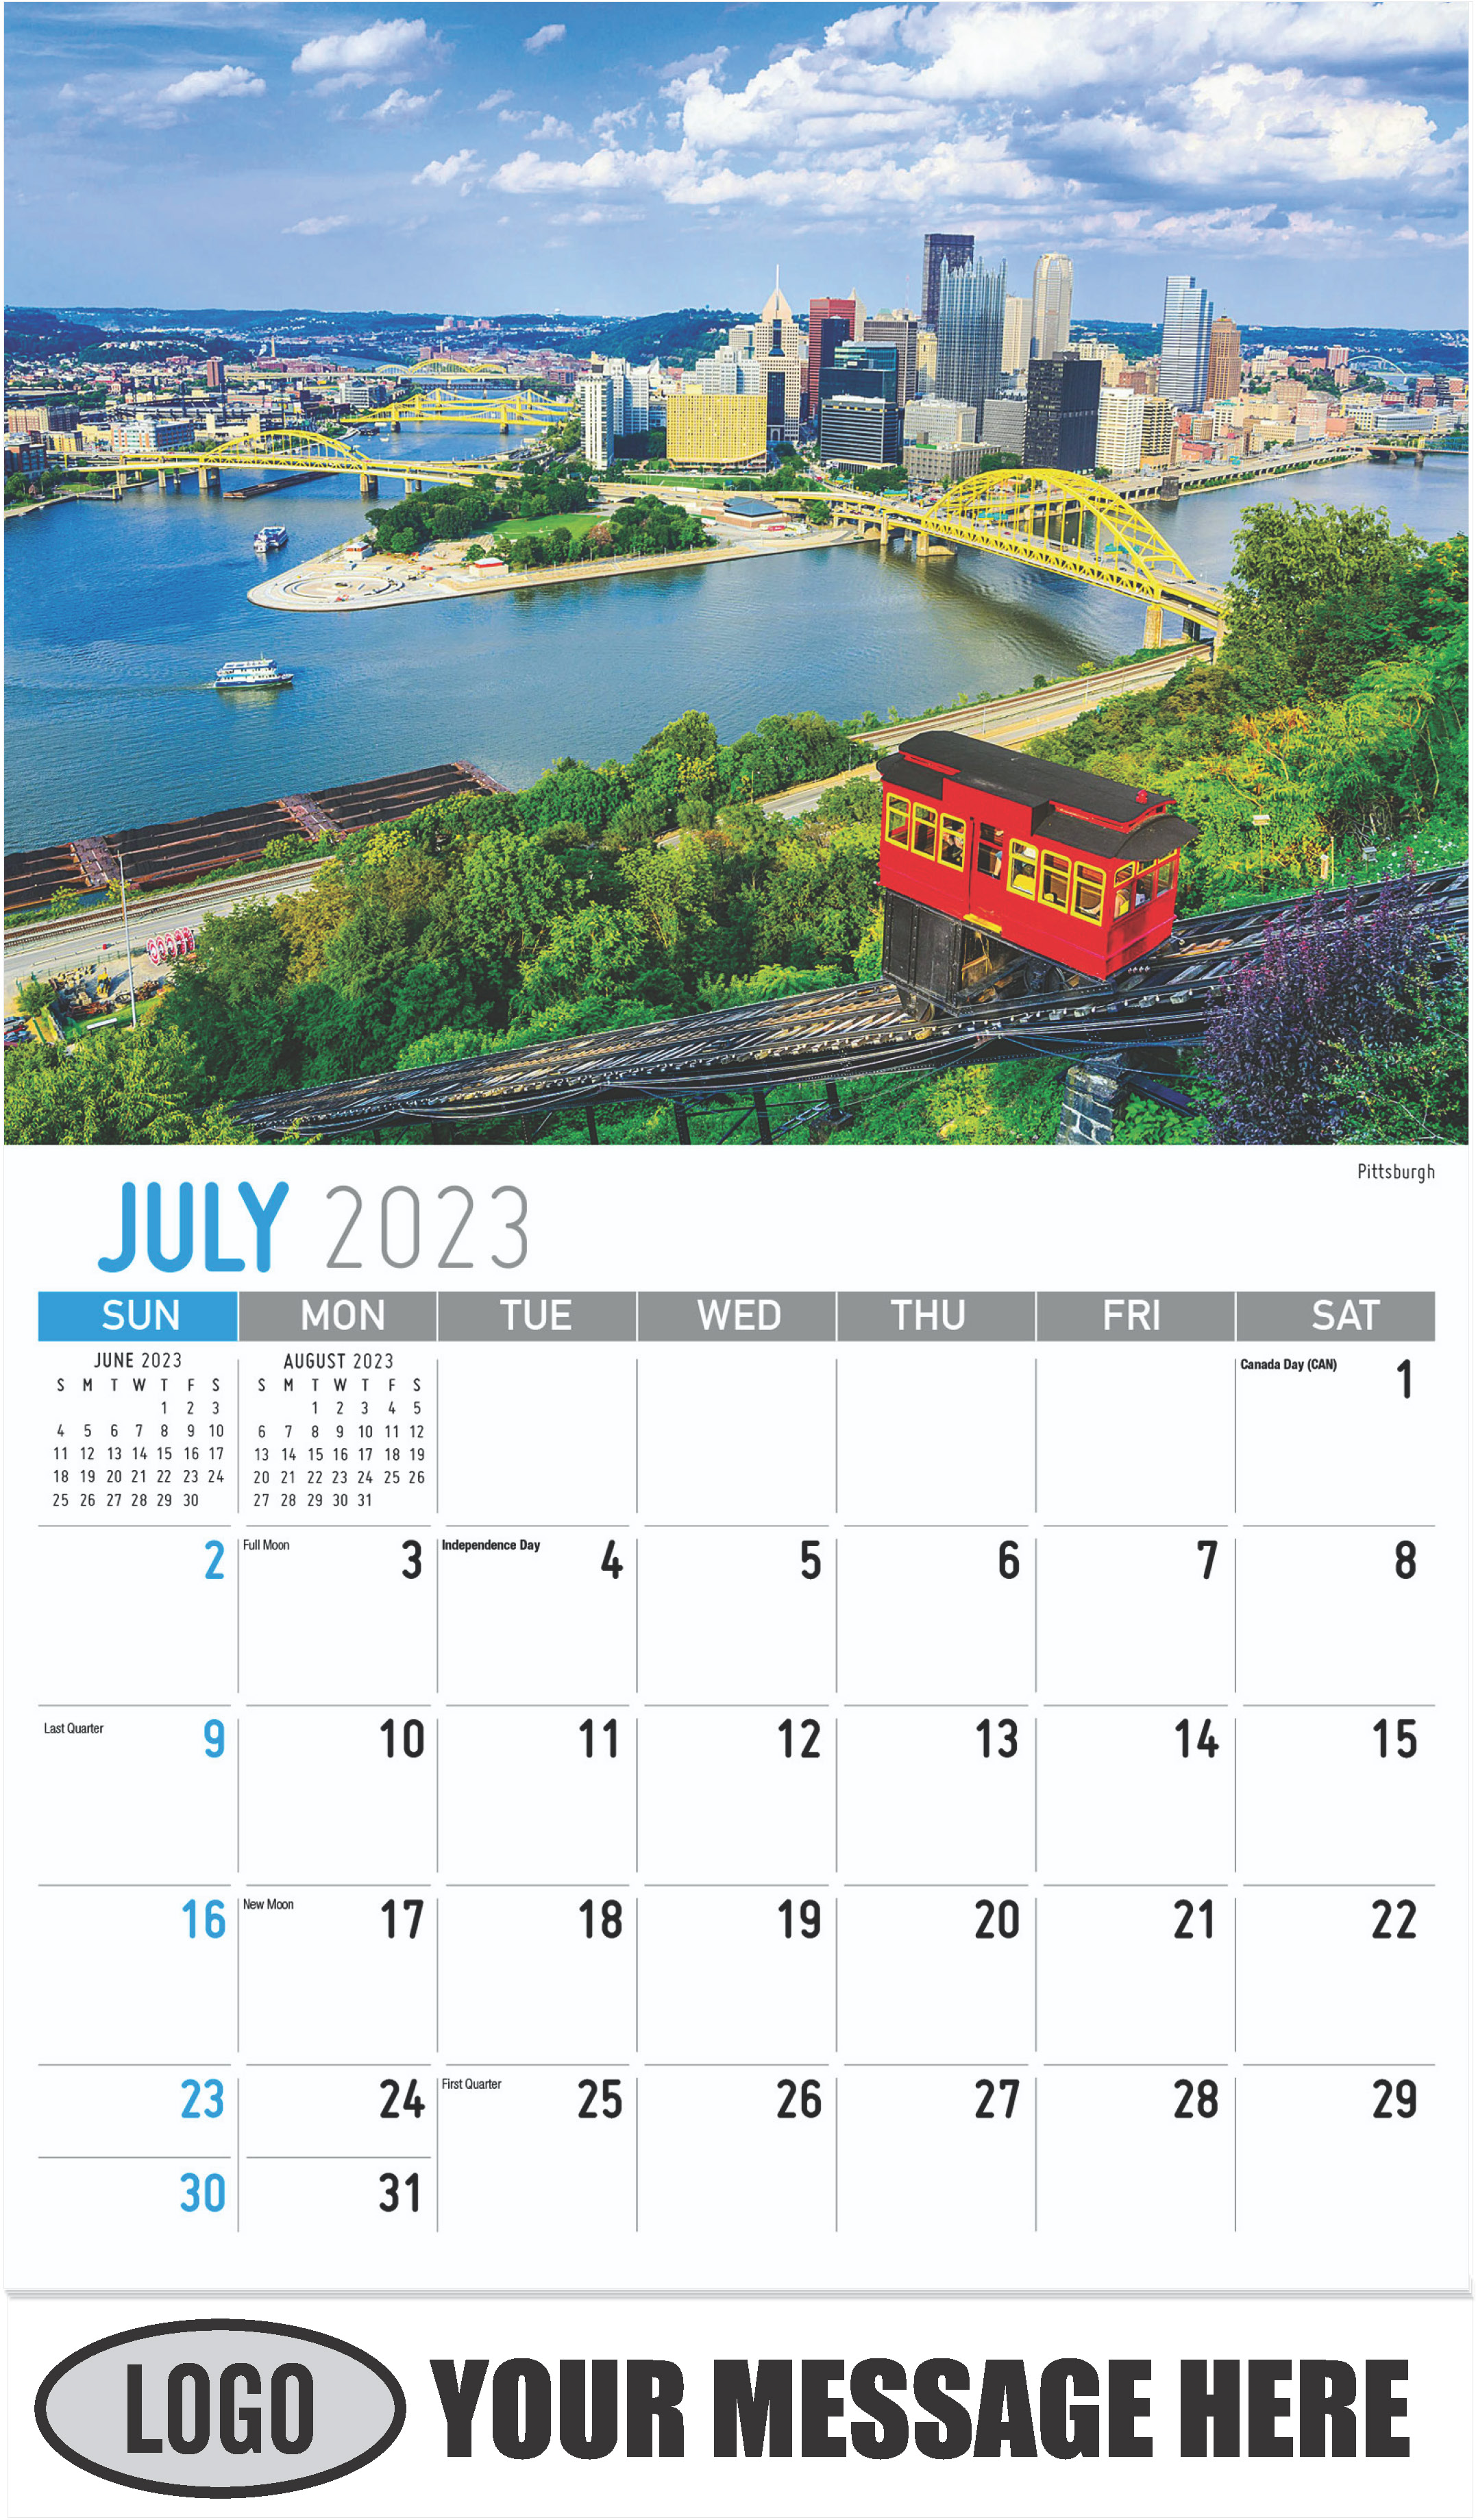 Pittsburgh - July - Scenes of Pennsylvania 2023 Promotional Calendar